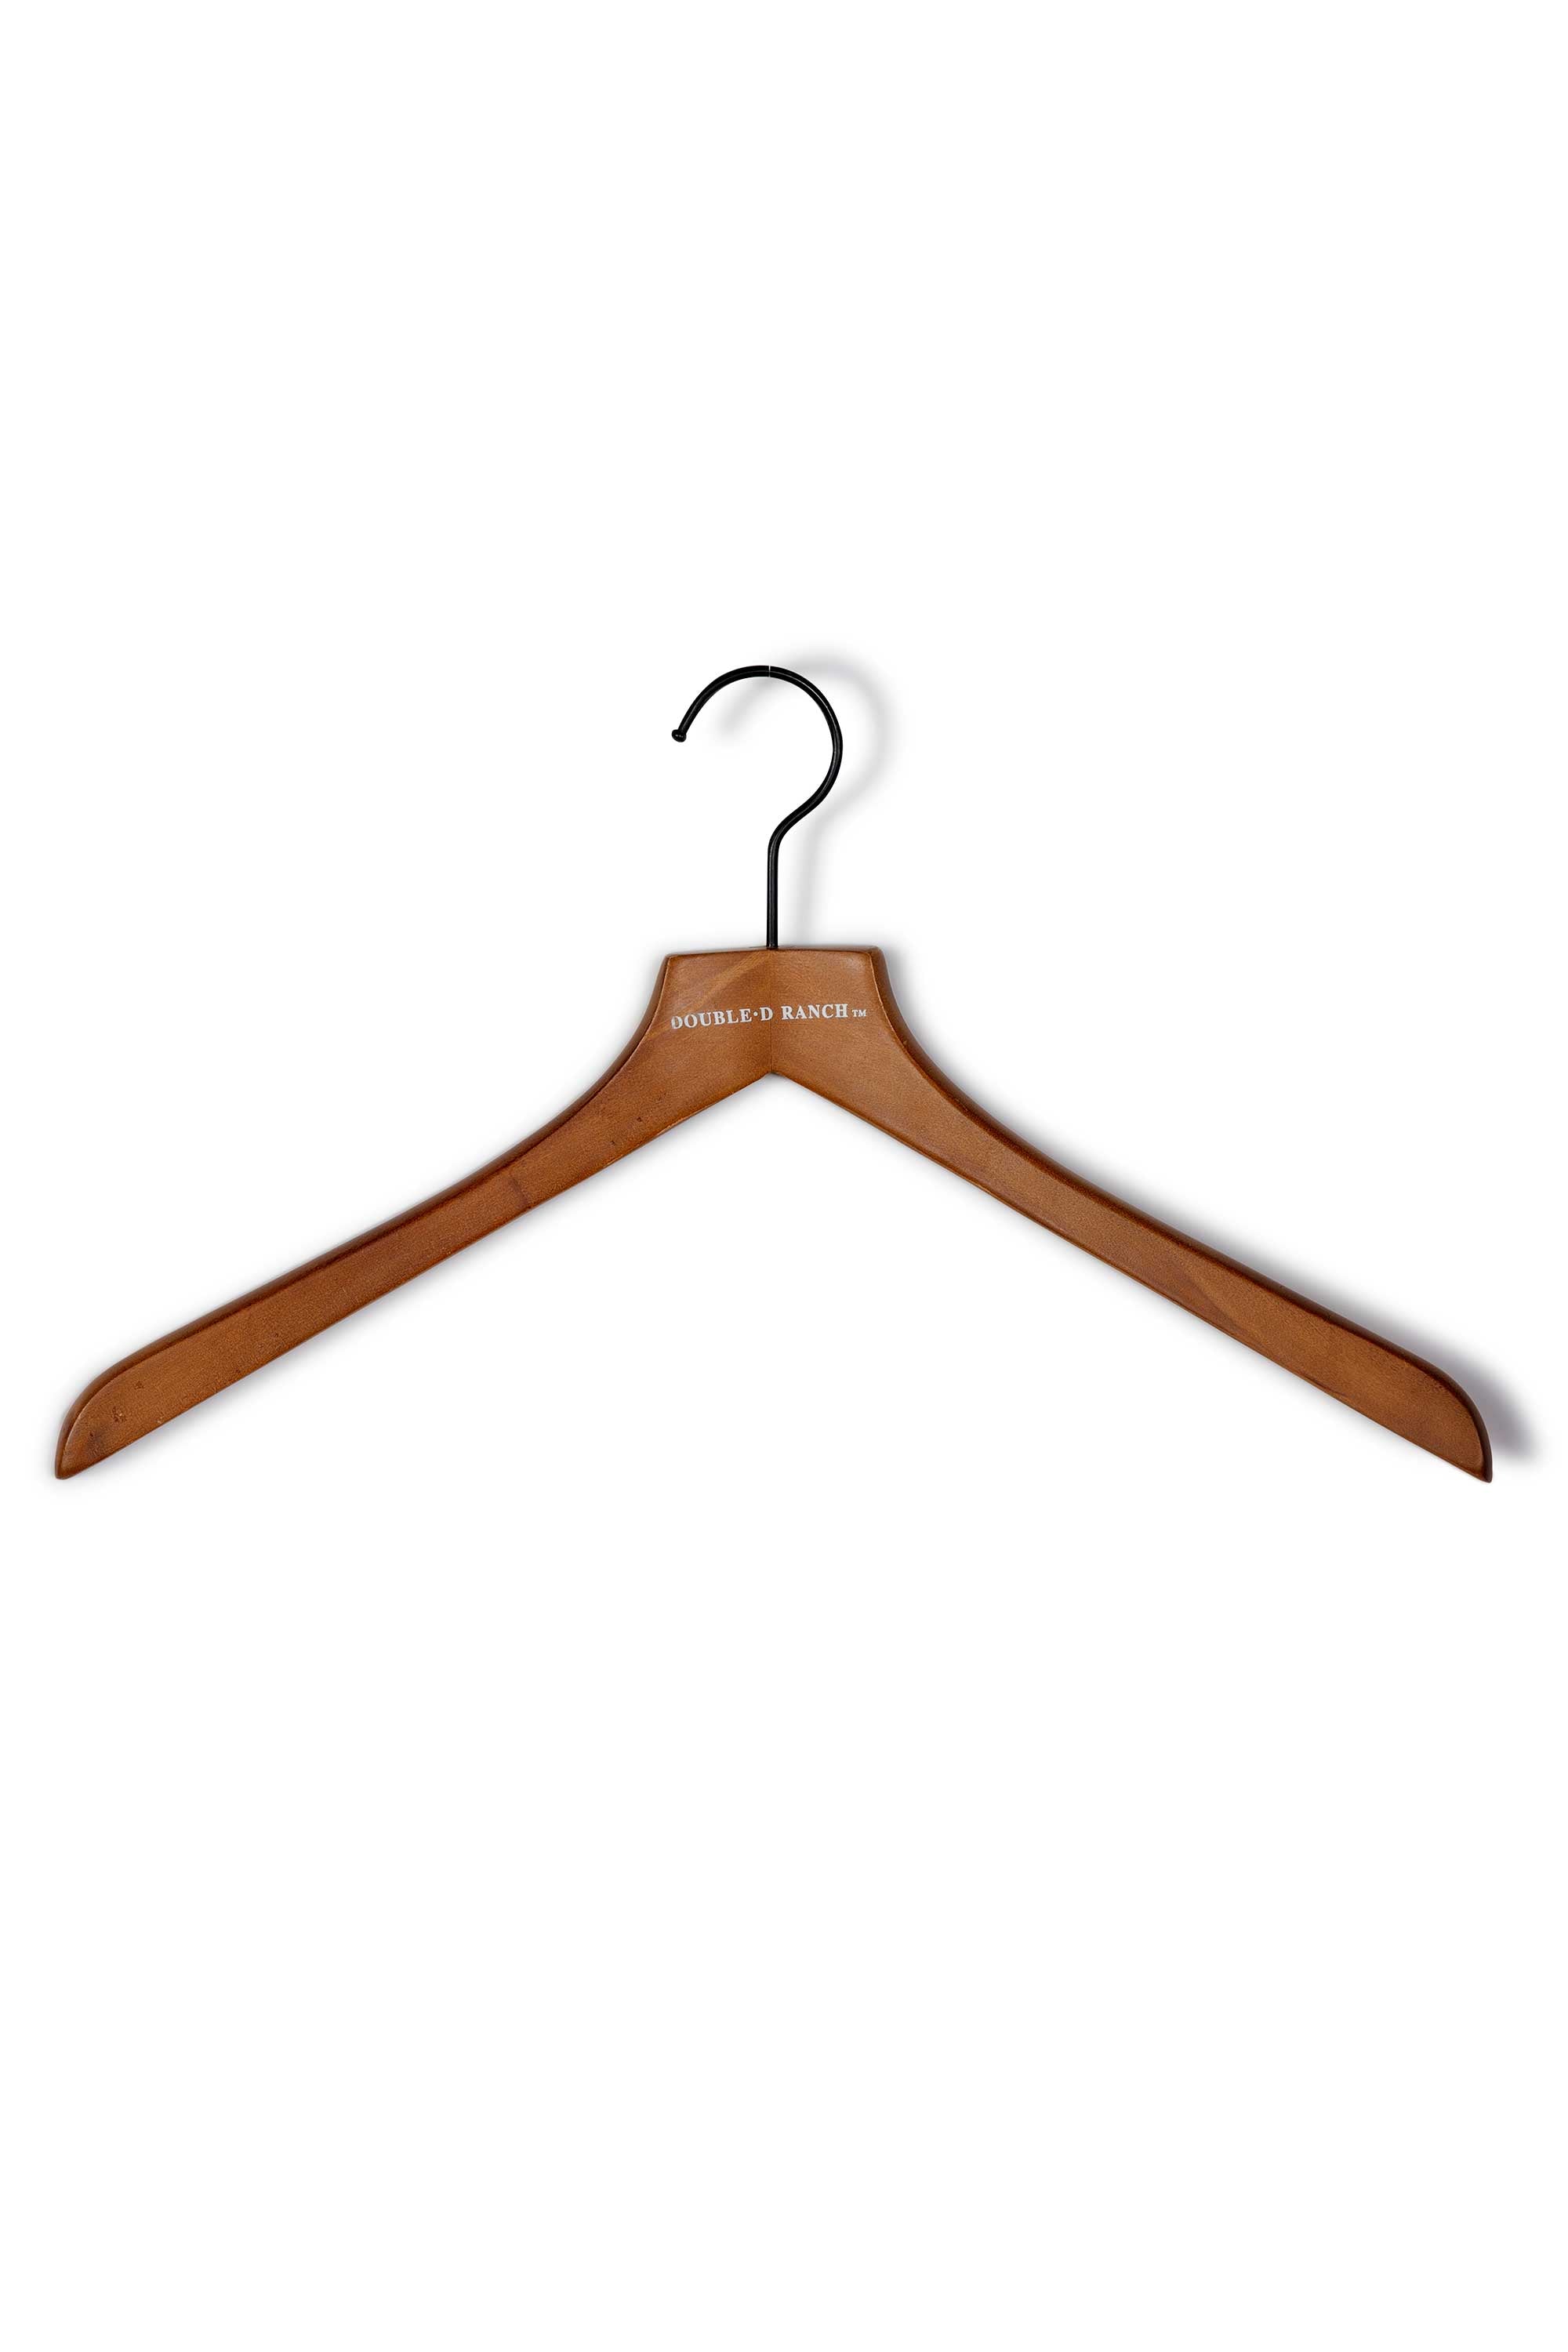 Wood Jacket Hanger